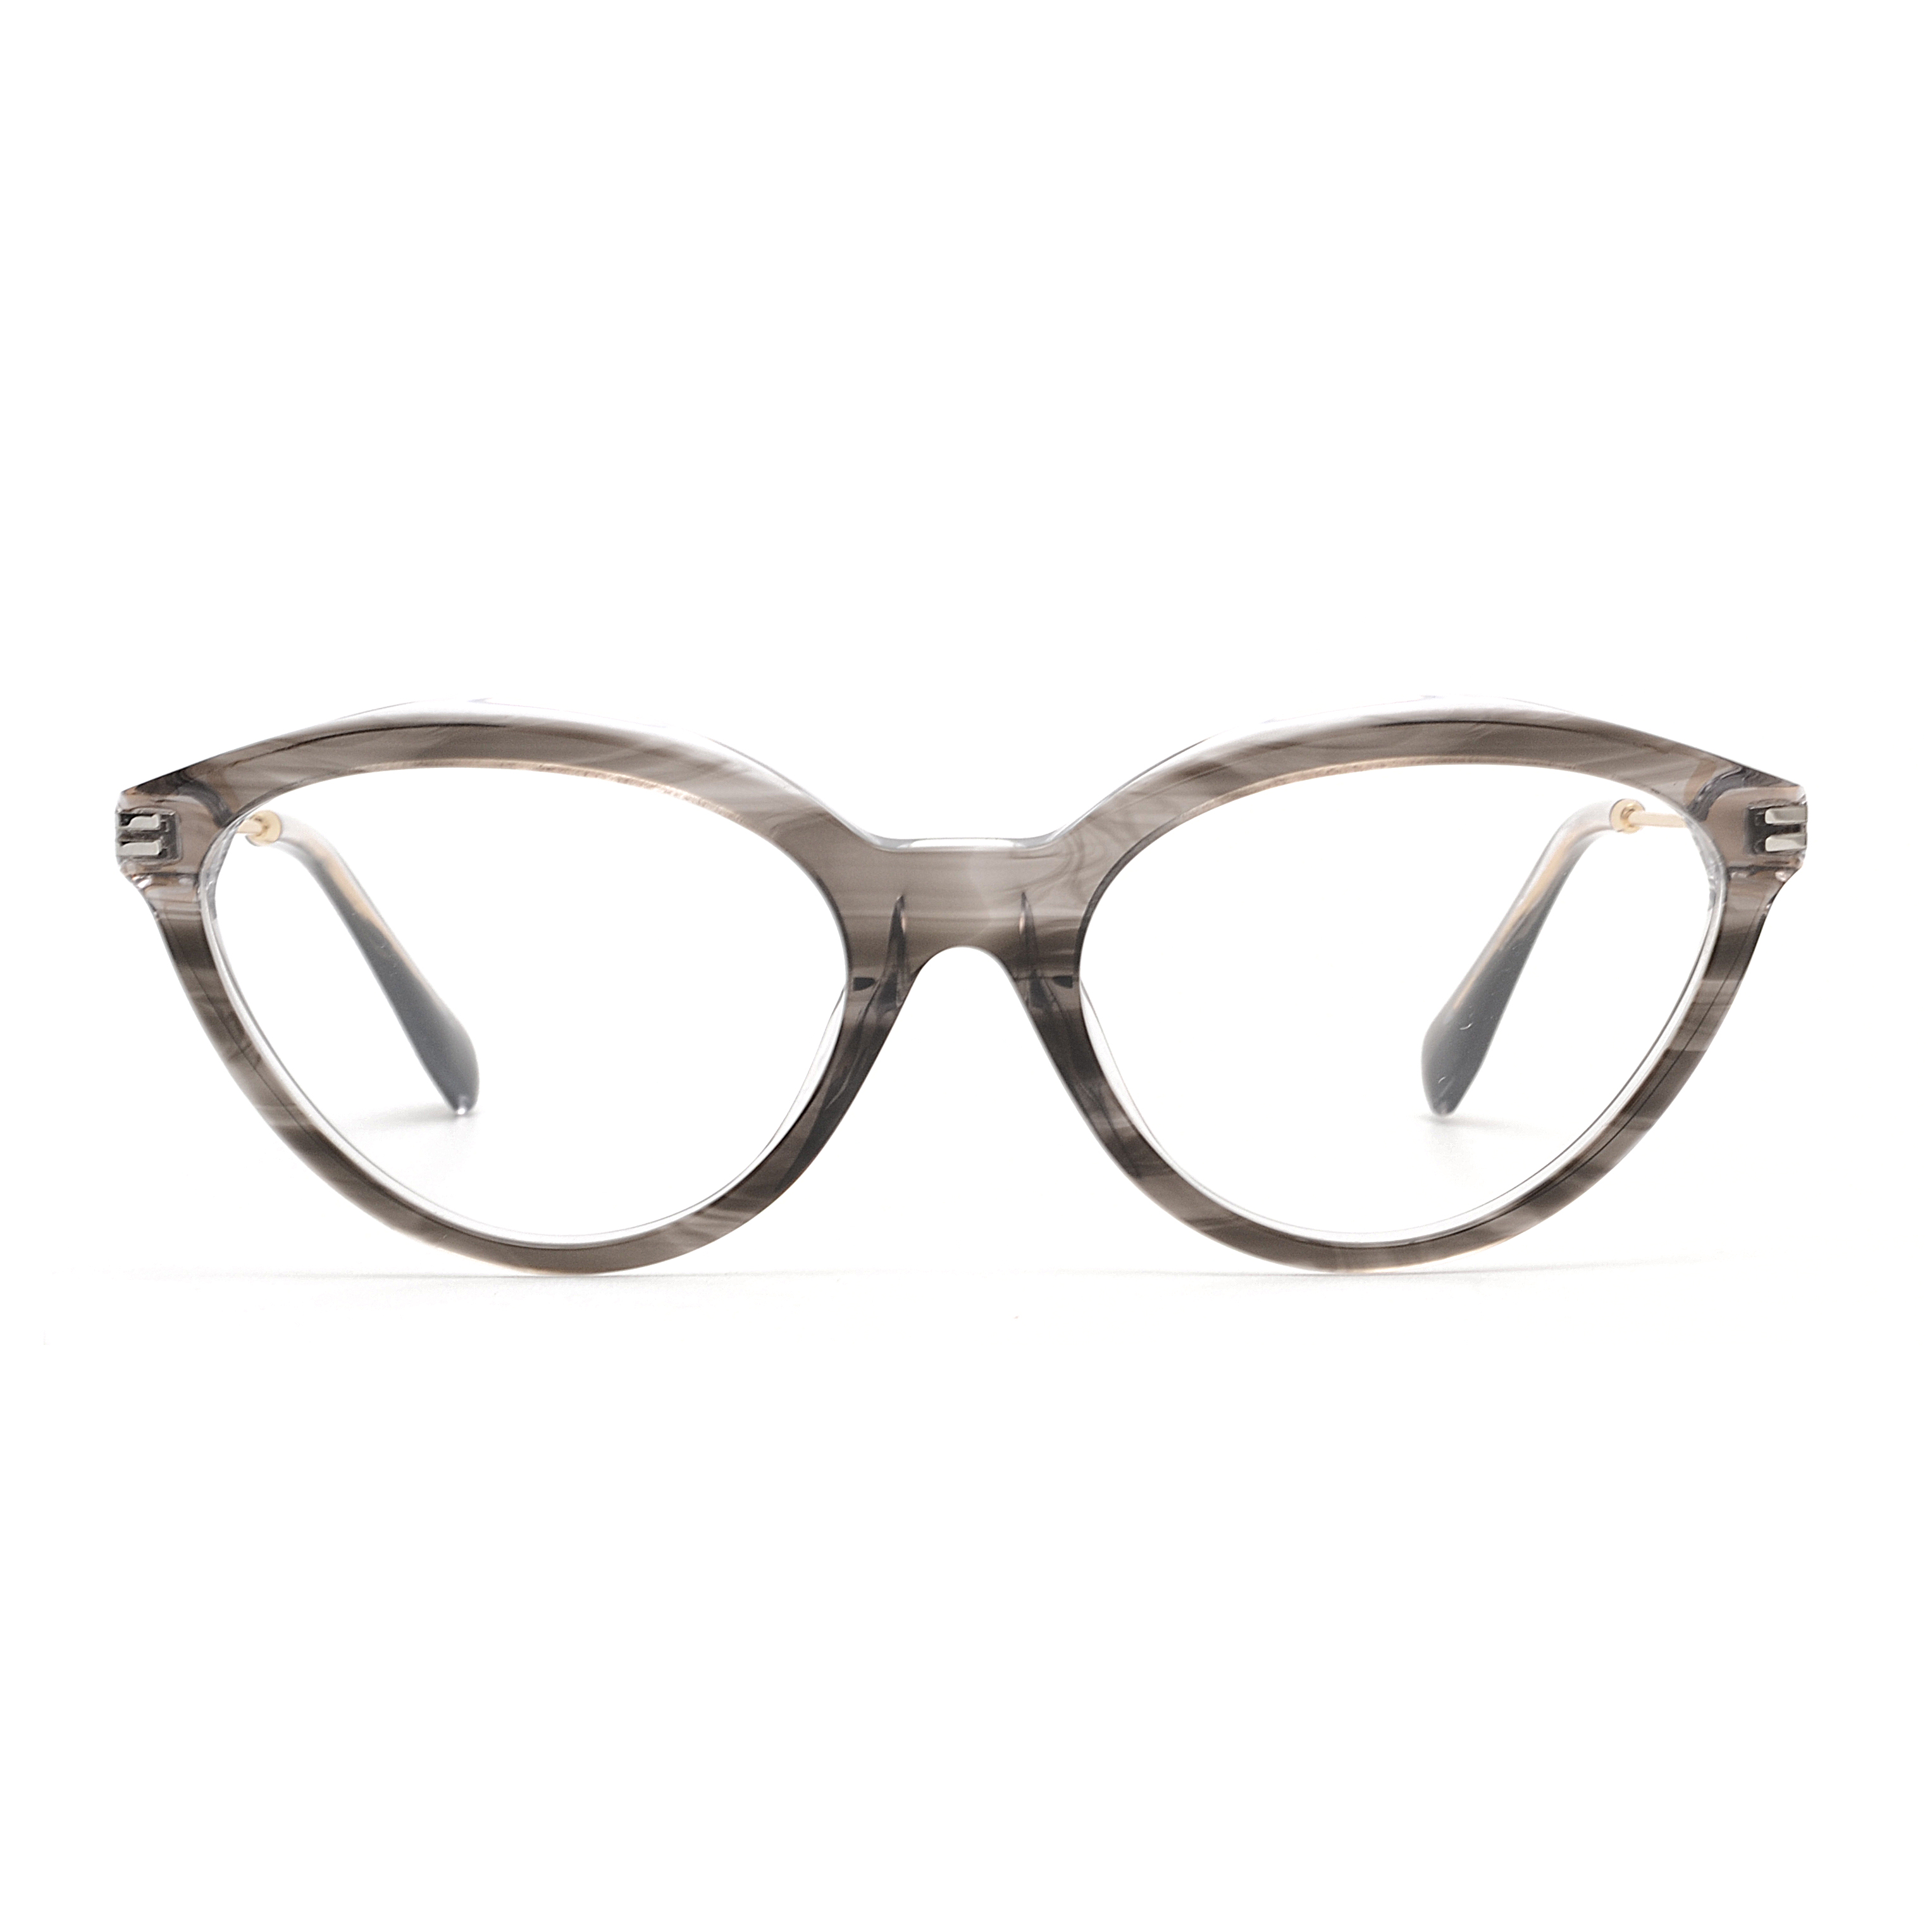 JOYSEE 2021 1525 Newest Fashion Ladies Cat Eye Optical Frames Acetate Prescription Glasses Frame Featured Image